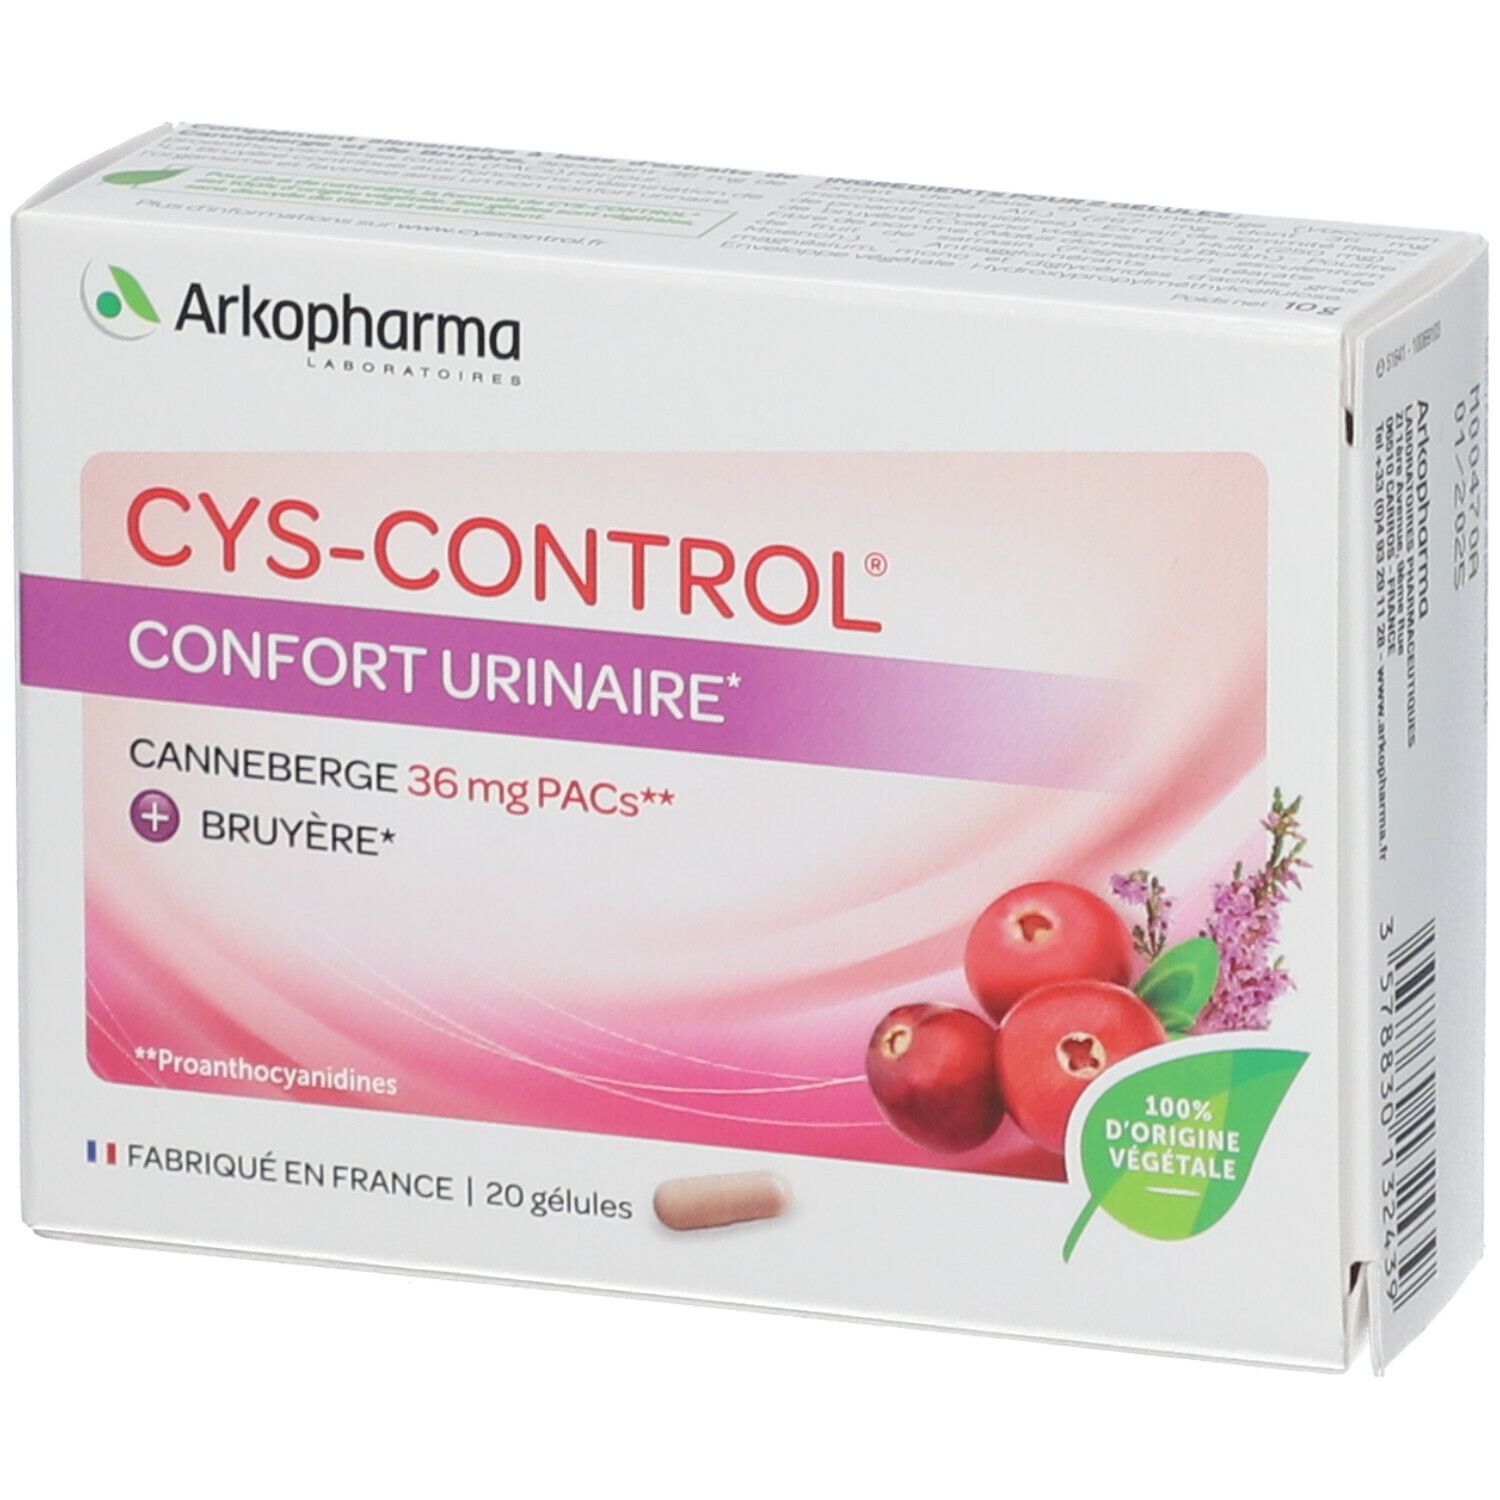 Image of Arkopharma Cys-control®